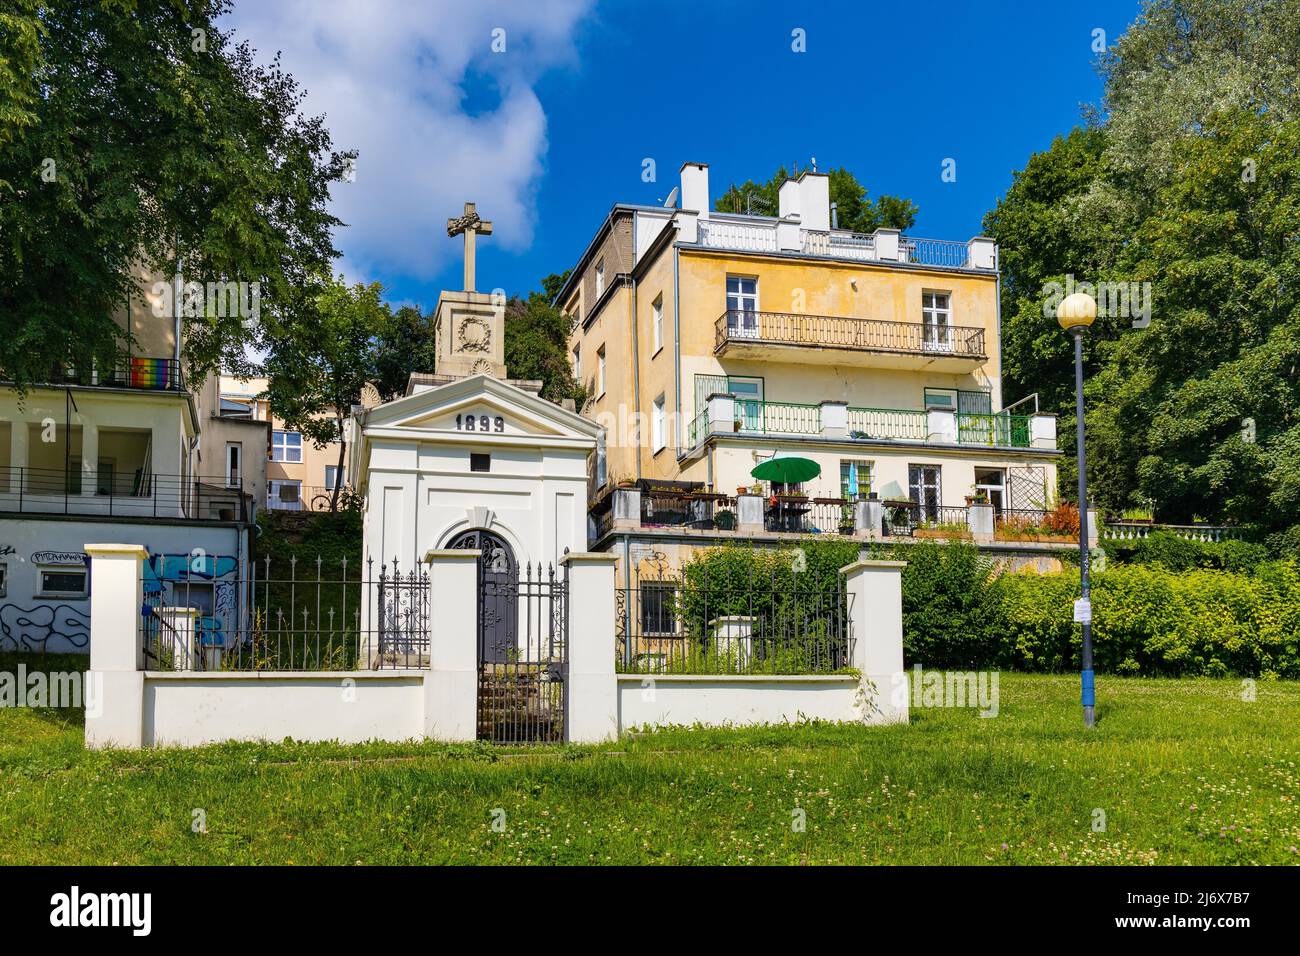 Warsaw, Poland - July 11, 2021: Historic villa house overlooking Promenada and Morskie Oko park at Belgijska street in Mokotow district of Warsaw Stock Photo